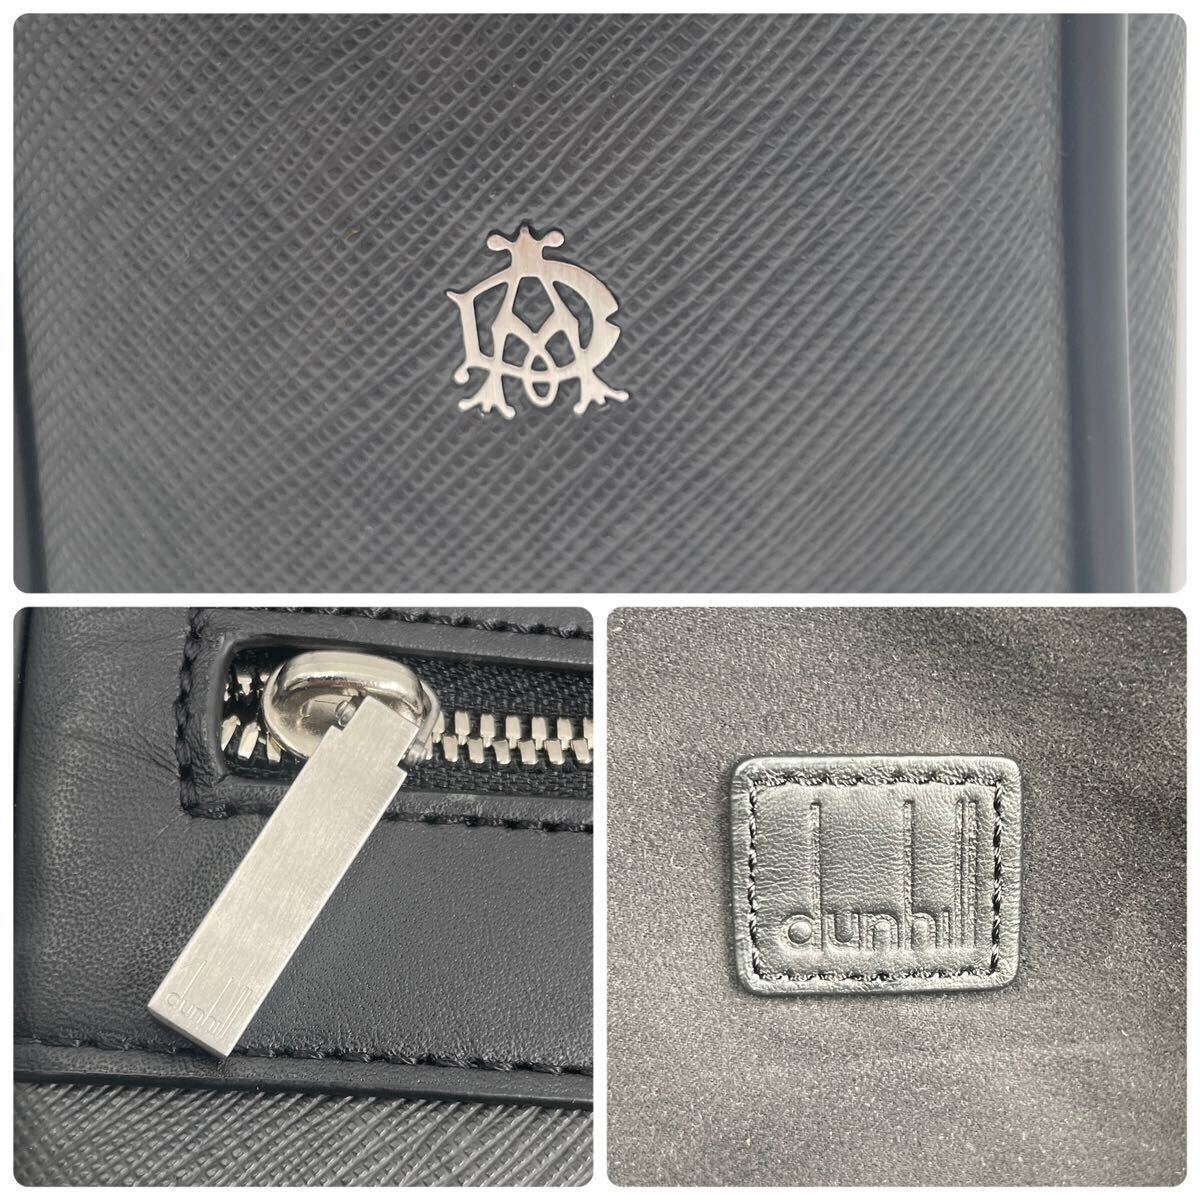 [ unused class /A4 storage ]dunhill Dunhill wing The - messenger bag shoulder bag business diagonal .. original leather men's black 